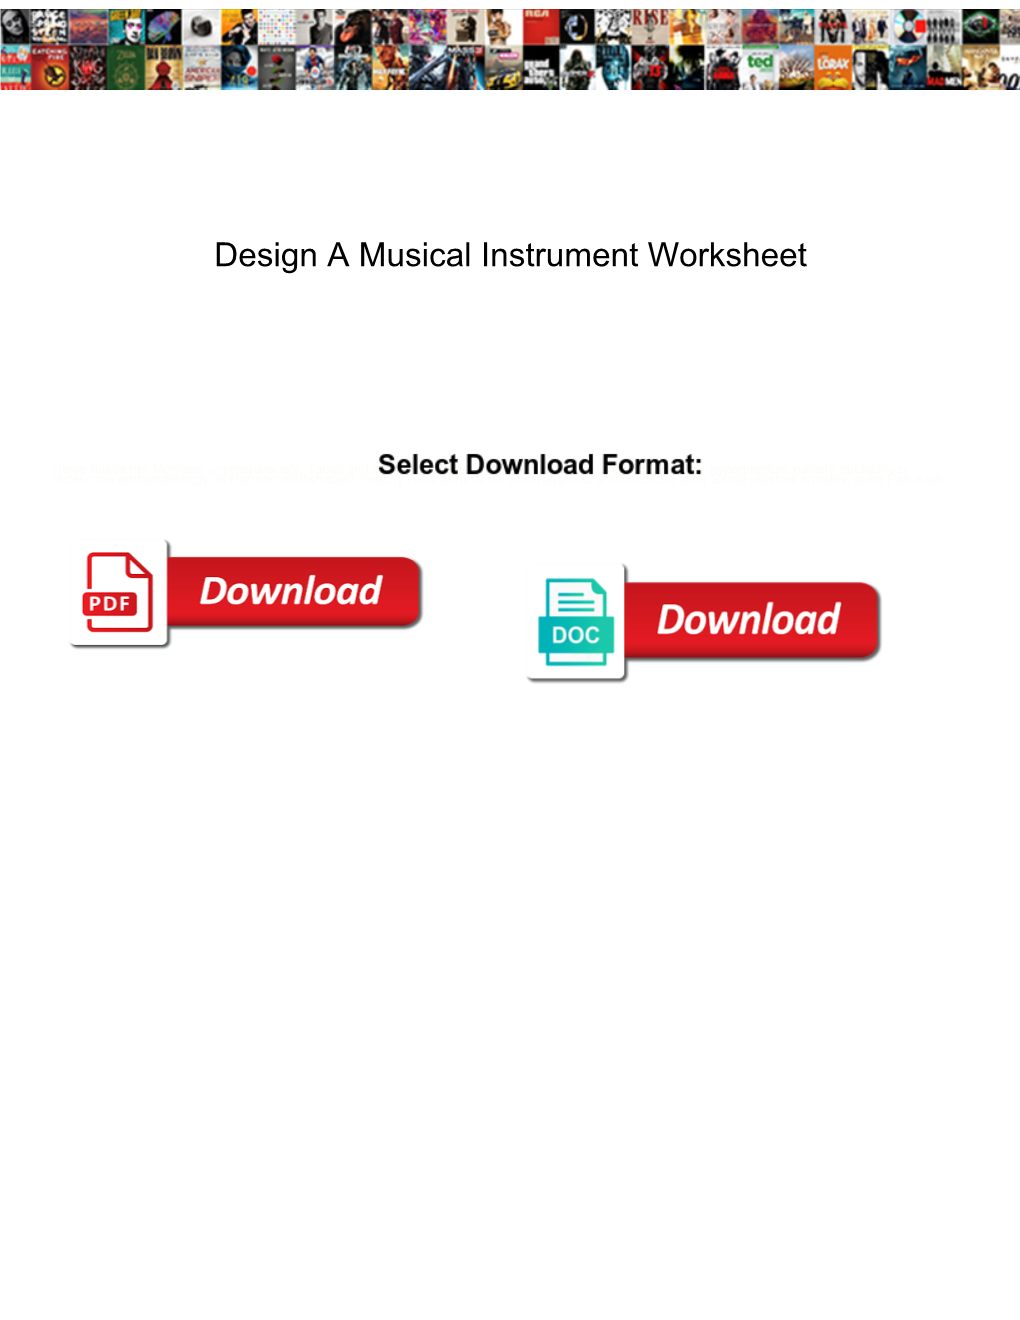 Design a Musical Instrument Worksheet